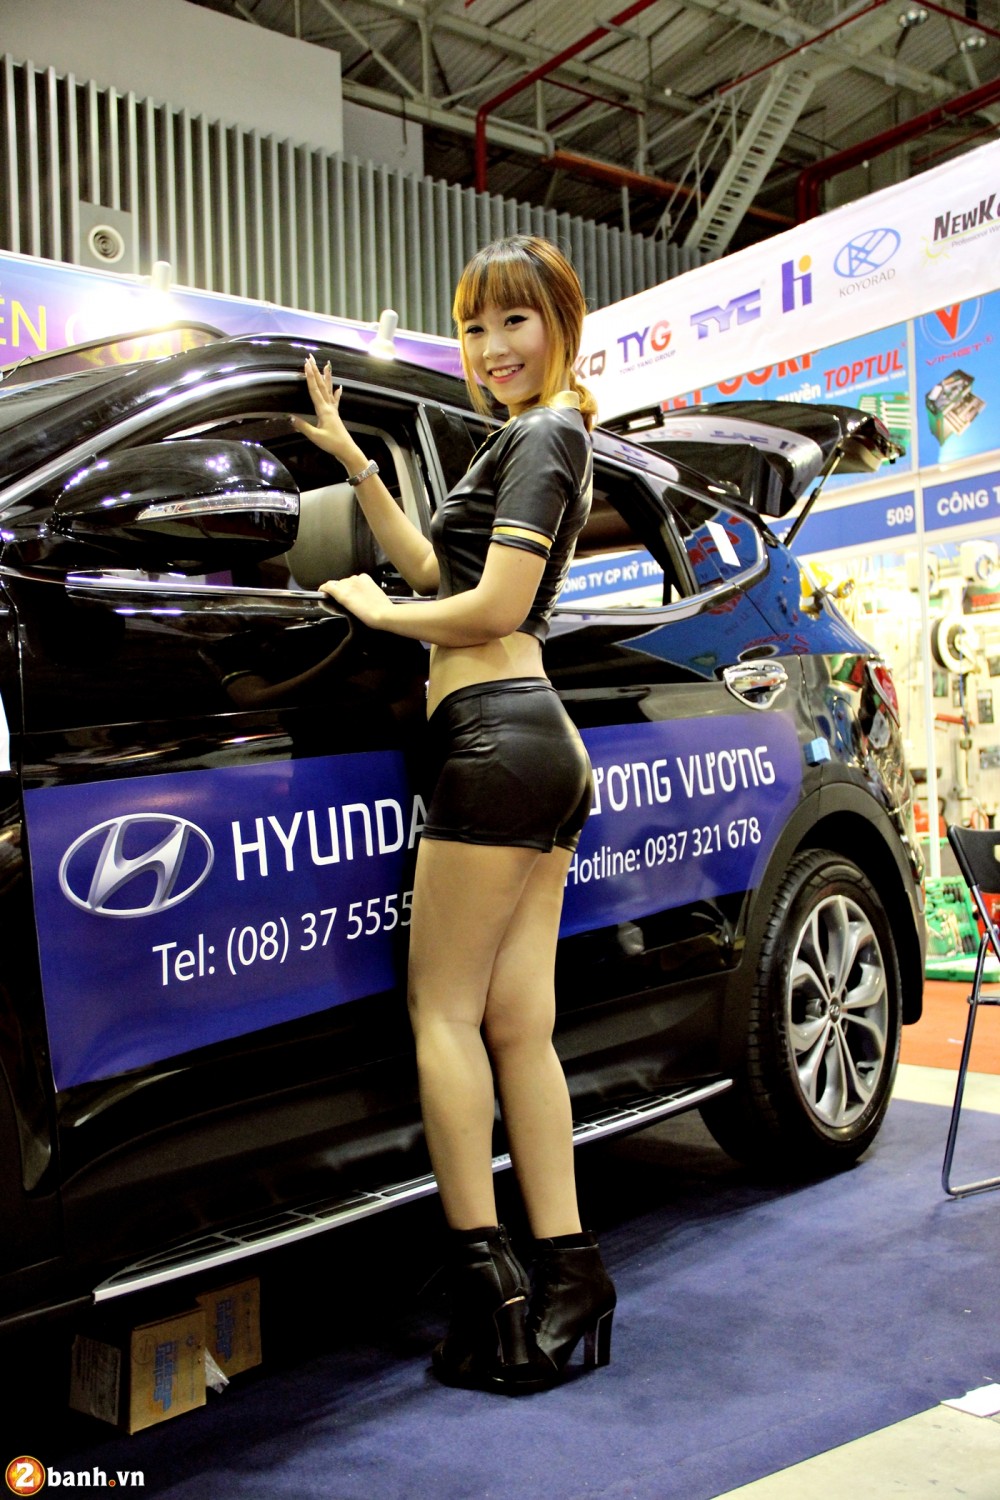 Saigon Autotech Accessories 2014 Trien lam cong nghiep O to xe may - 18